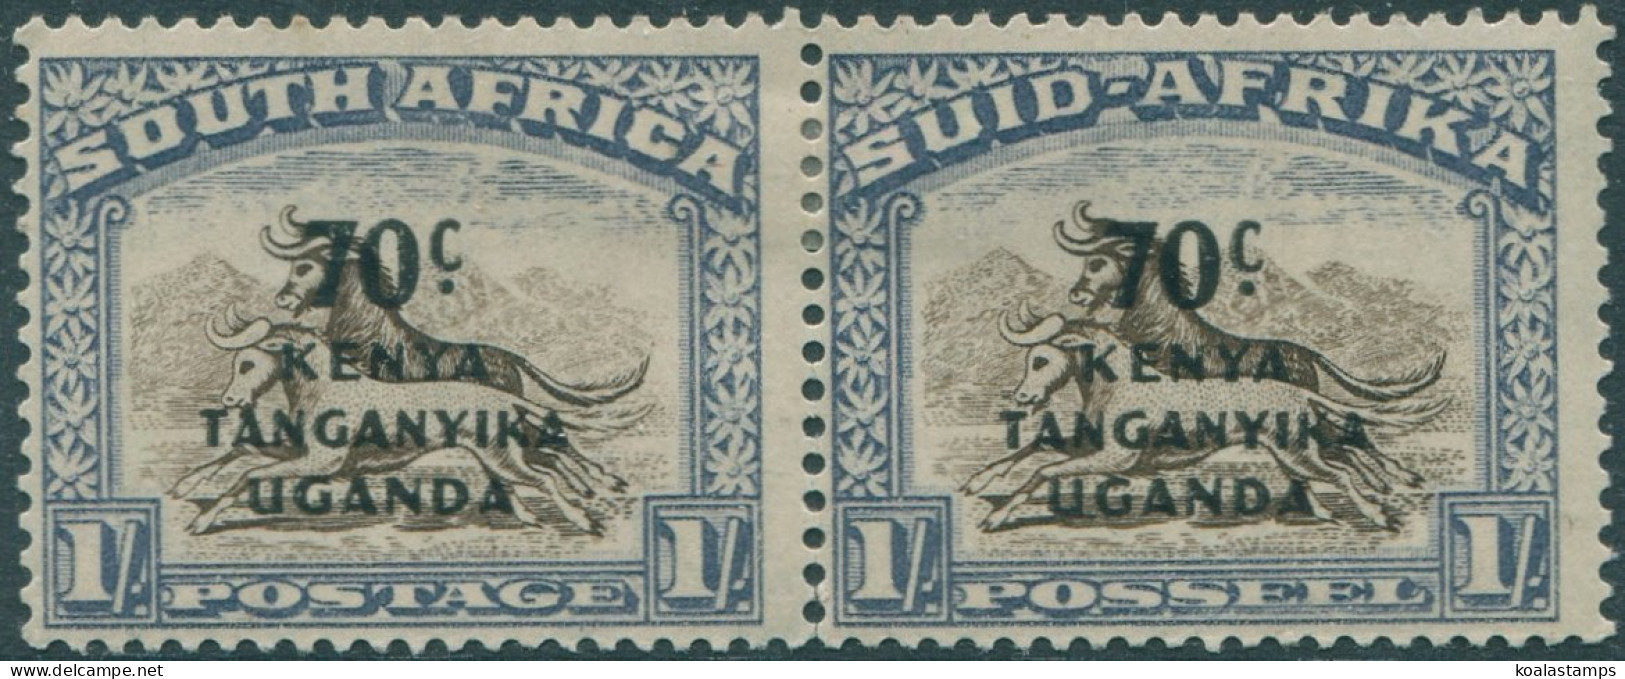 Kenya Uganda And Tanganyika 1941 SG154 70c Ovpt On 1s Brown And Blue SA Pair MH - Kenya, Ouganda & Tanganyika